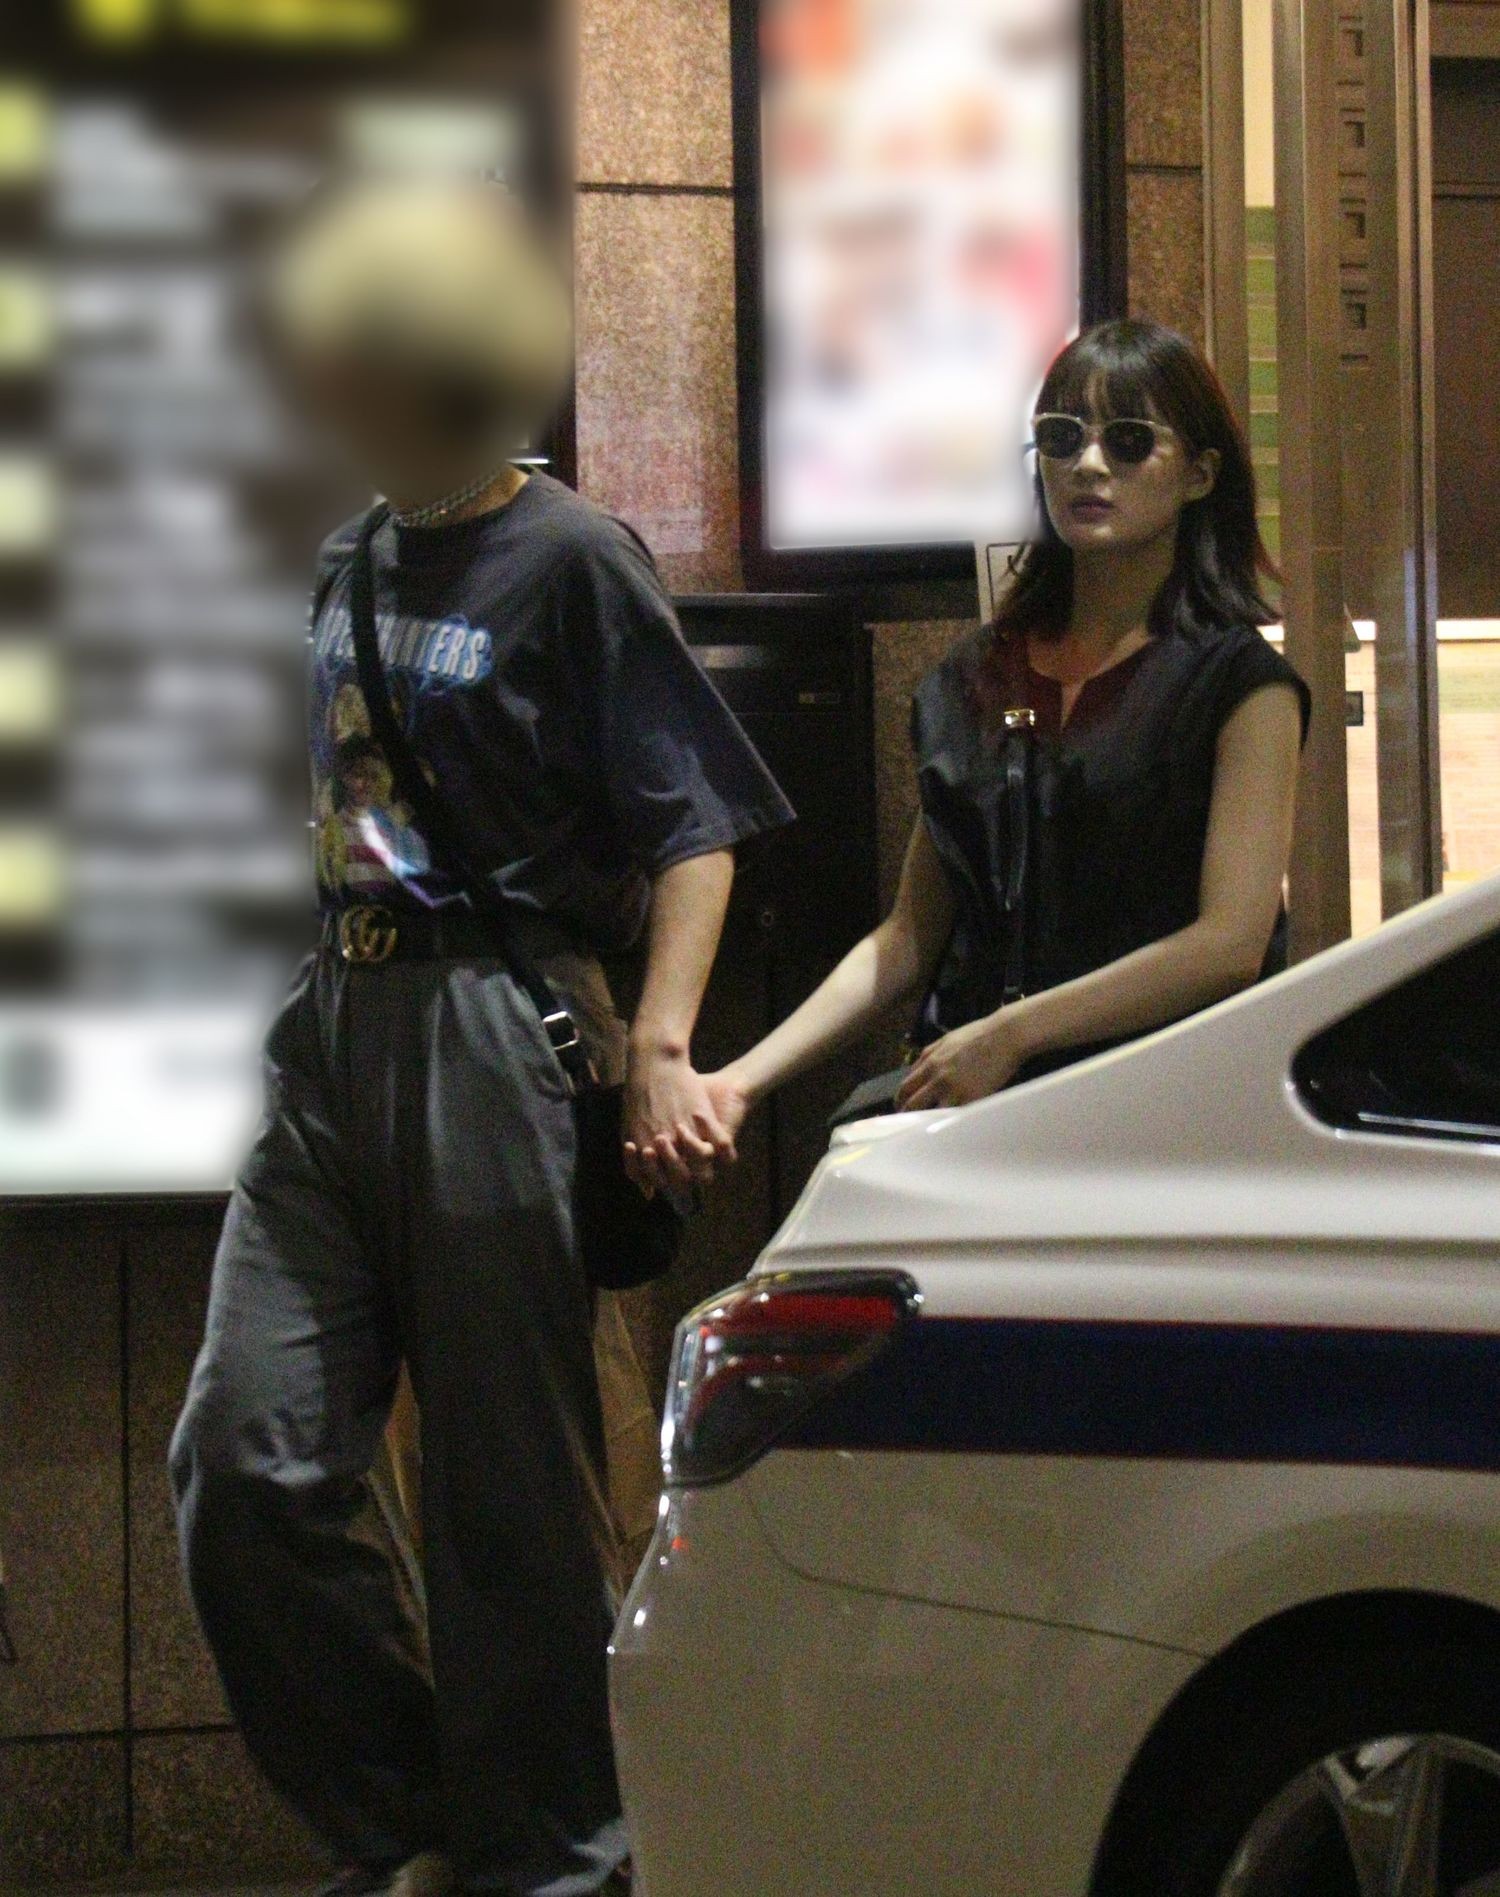 [Image] A fashionable boy's outfit wwwwwwwwww where hand-held date with Keyakizaka 46 was shot hard